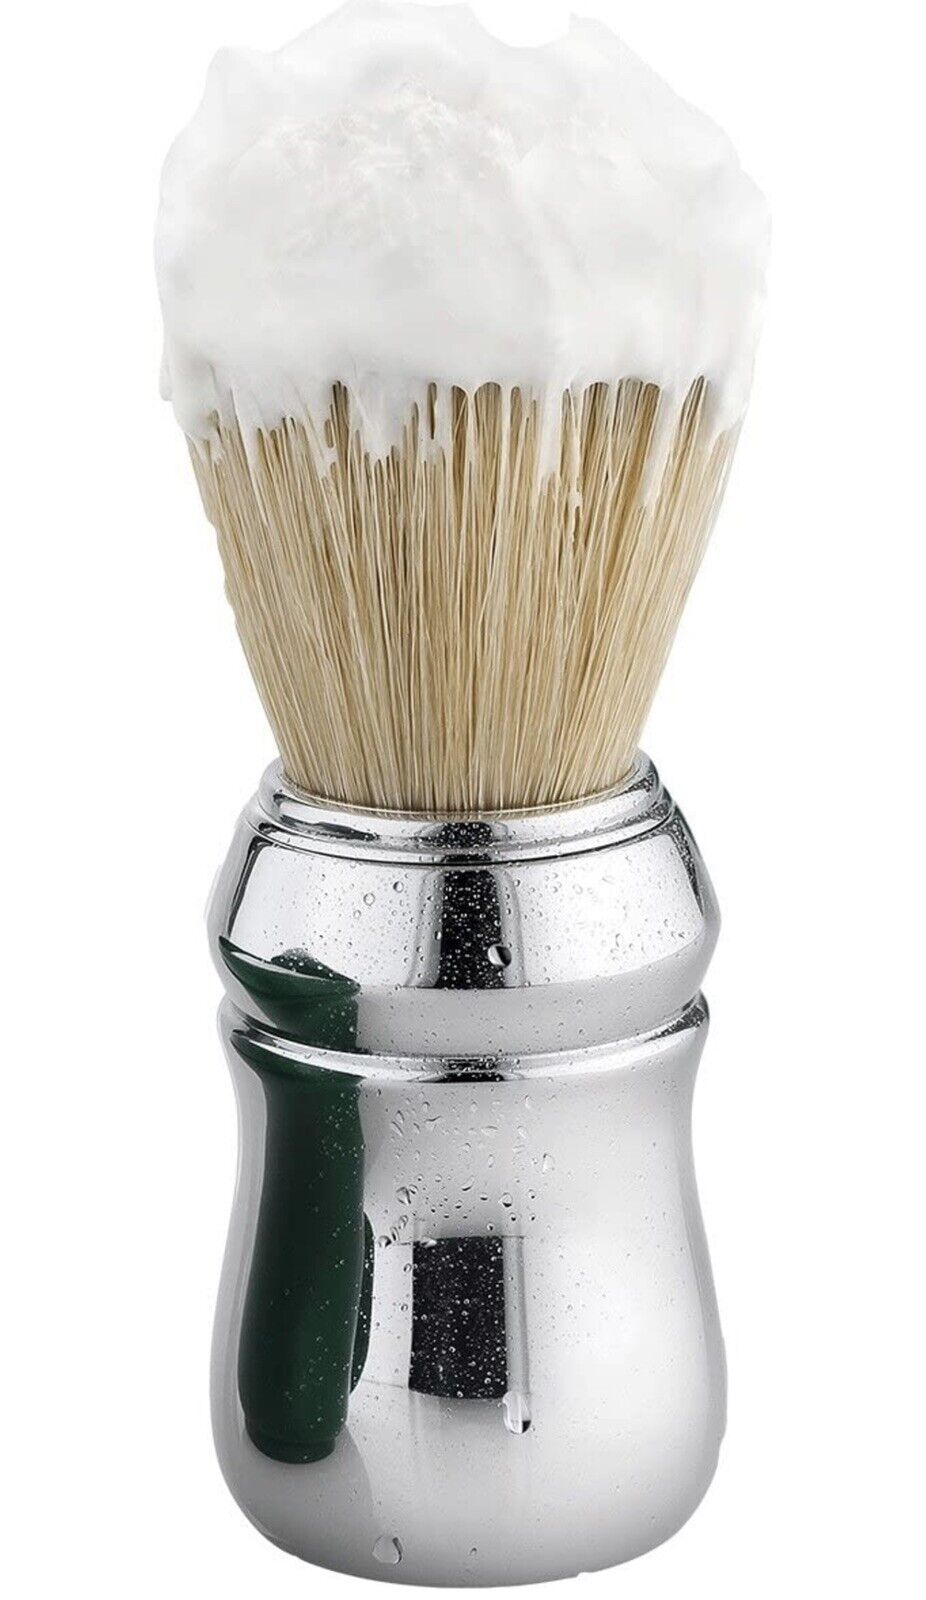 Proraso Professonal Shaving Brush Brand New